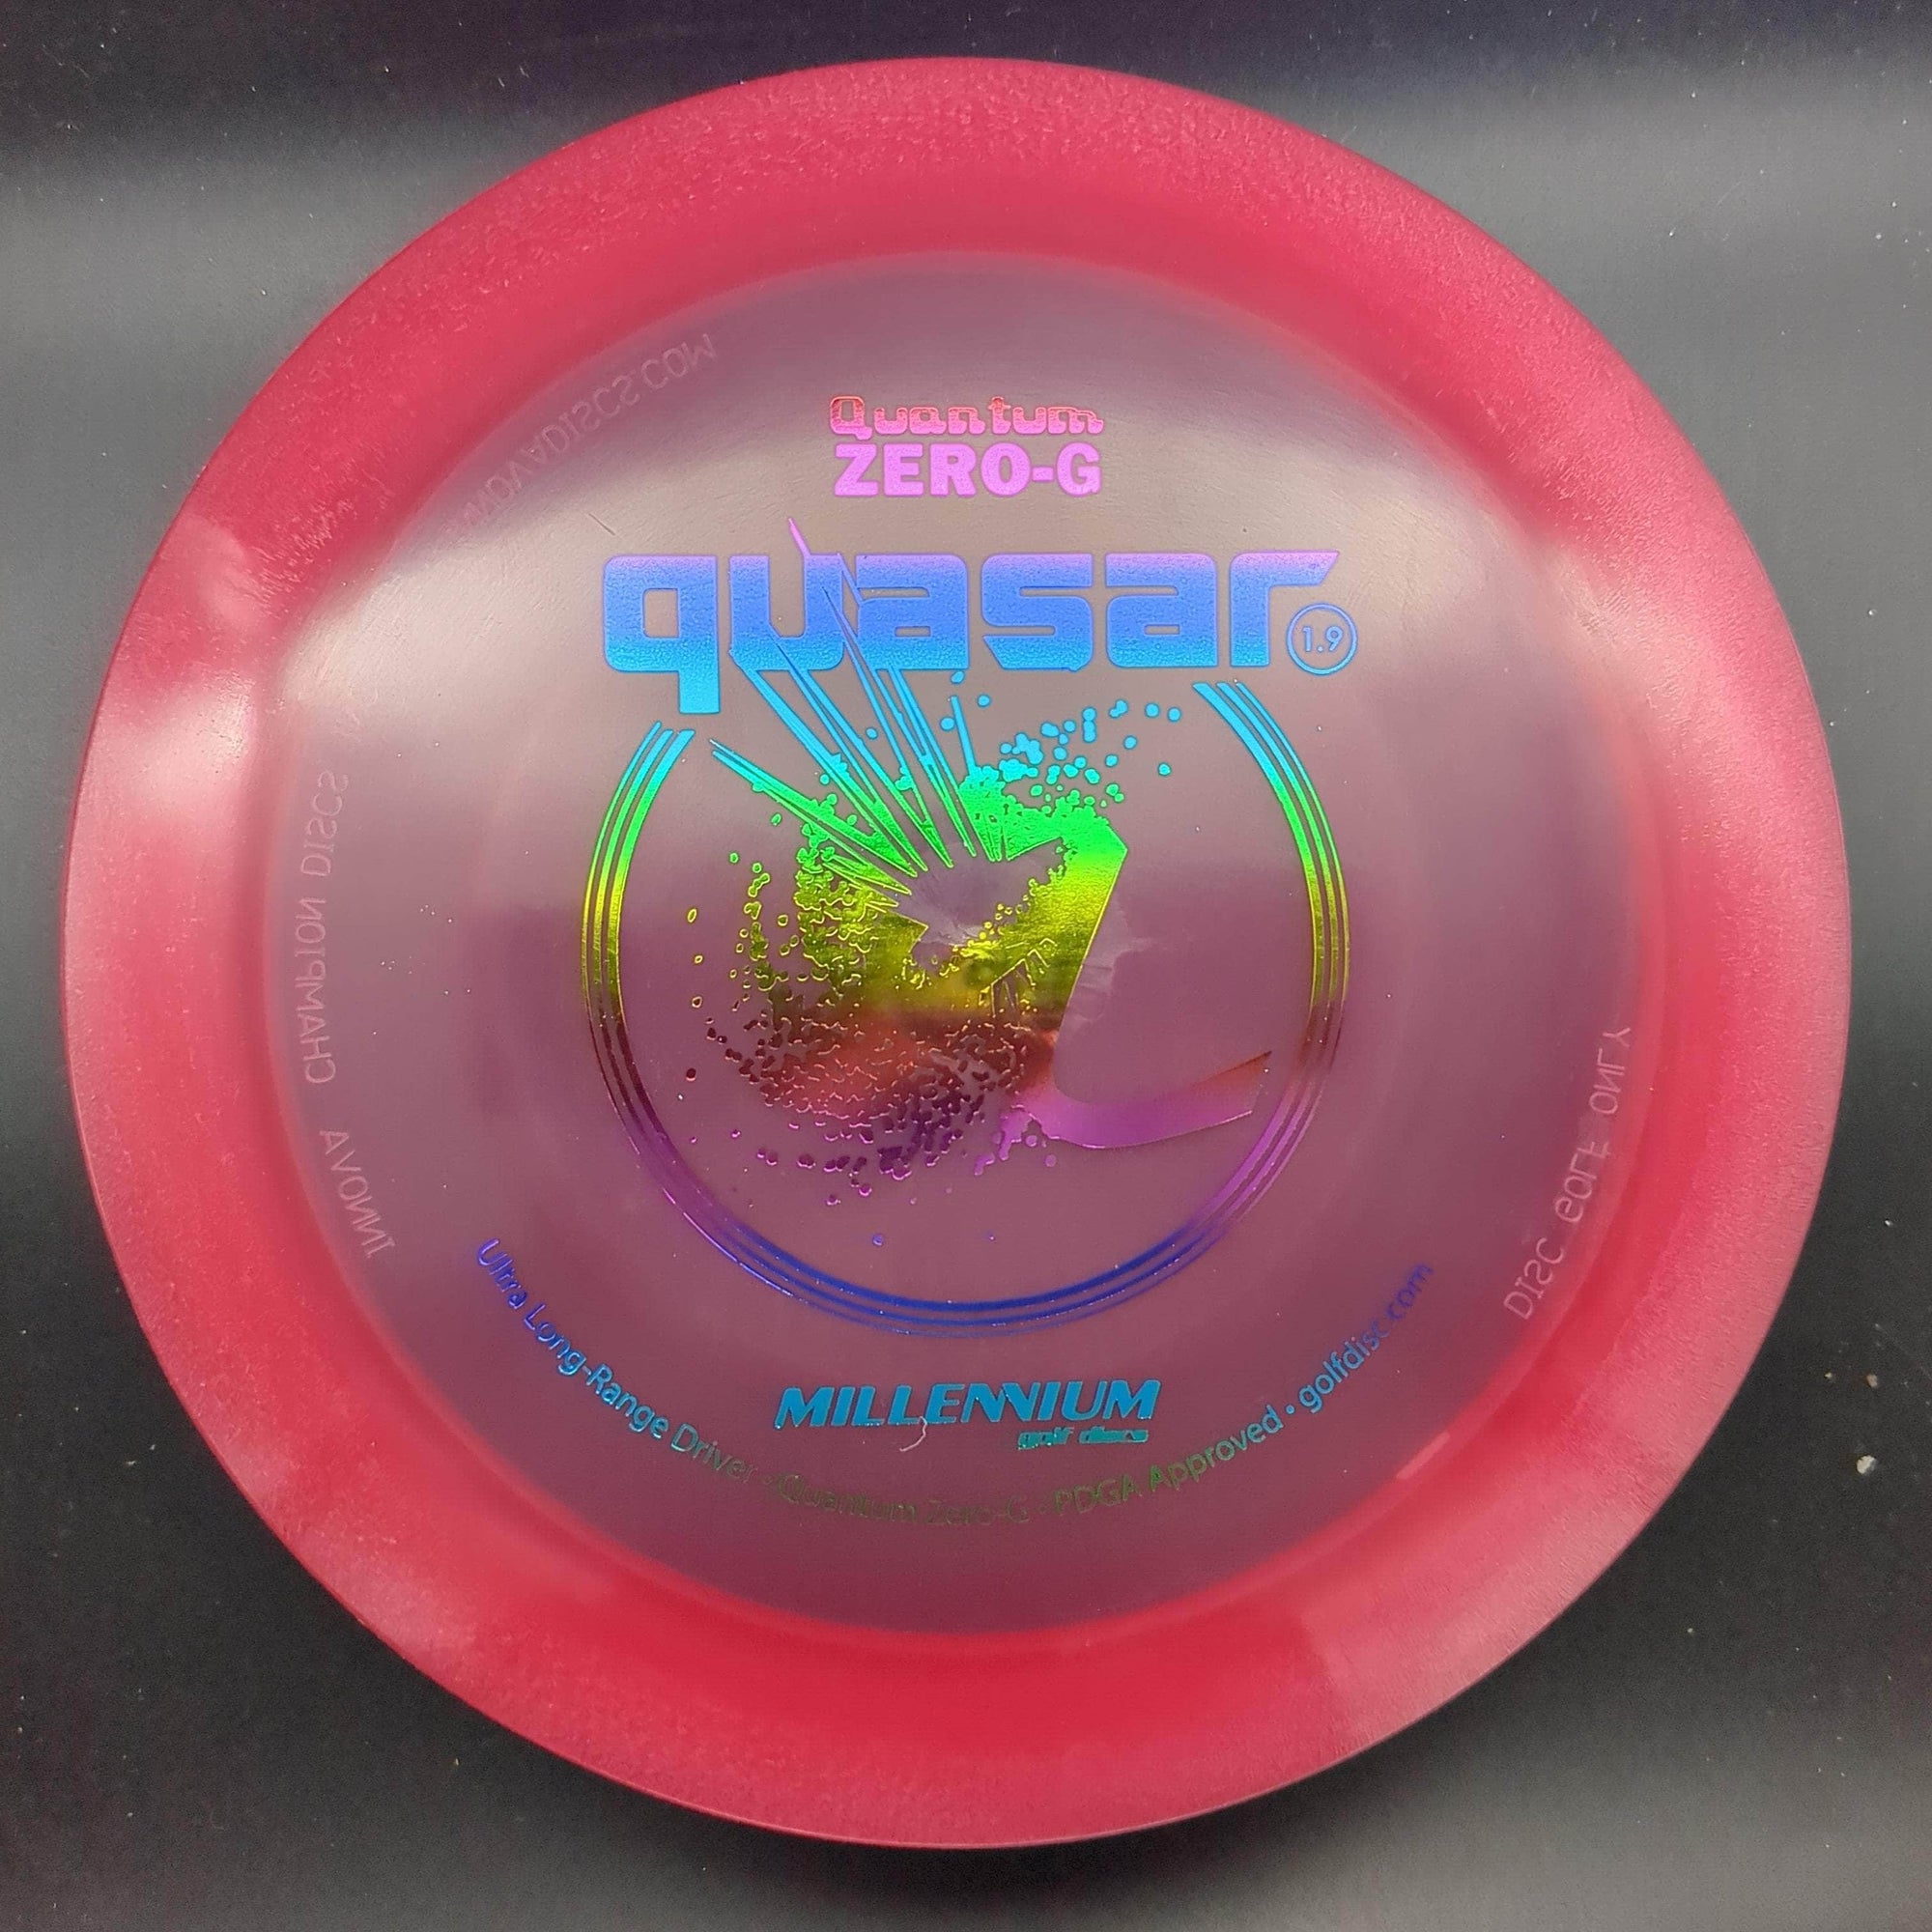 Millennium Discs Distance Driver Red Silver Stamp 162g Quasar, Zero G Plastic